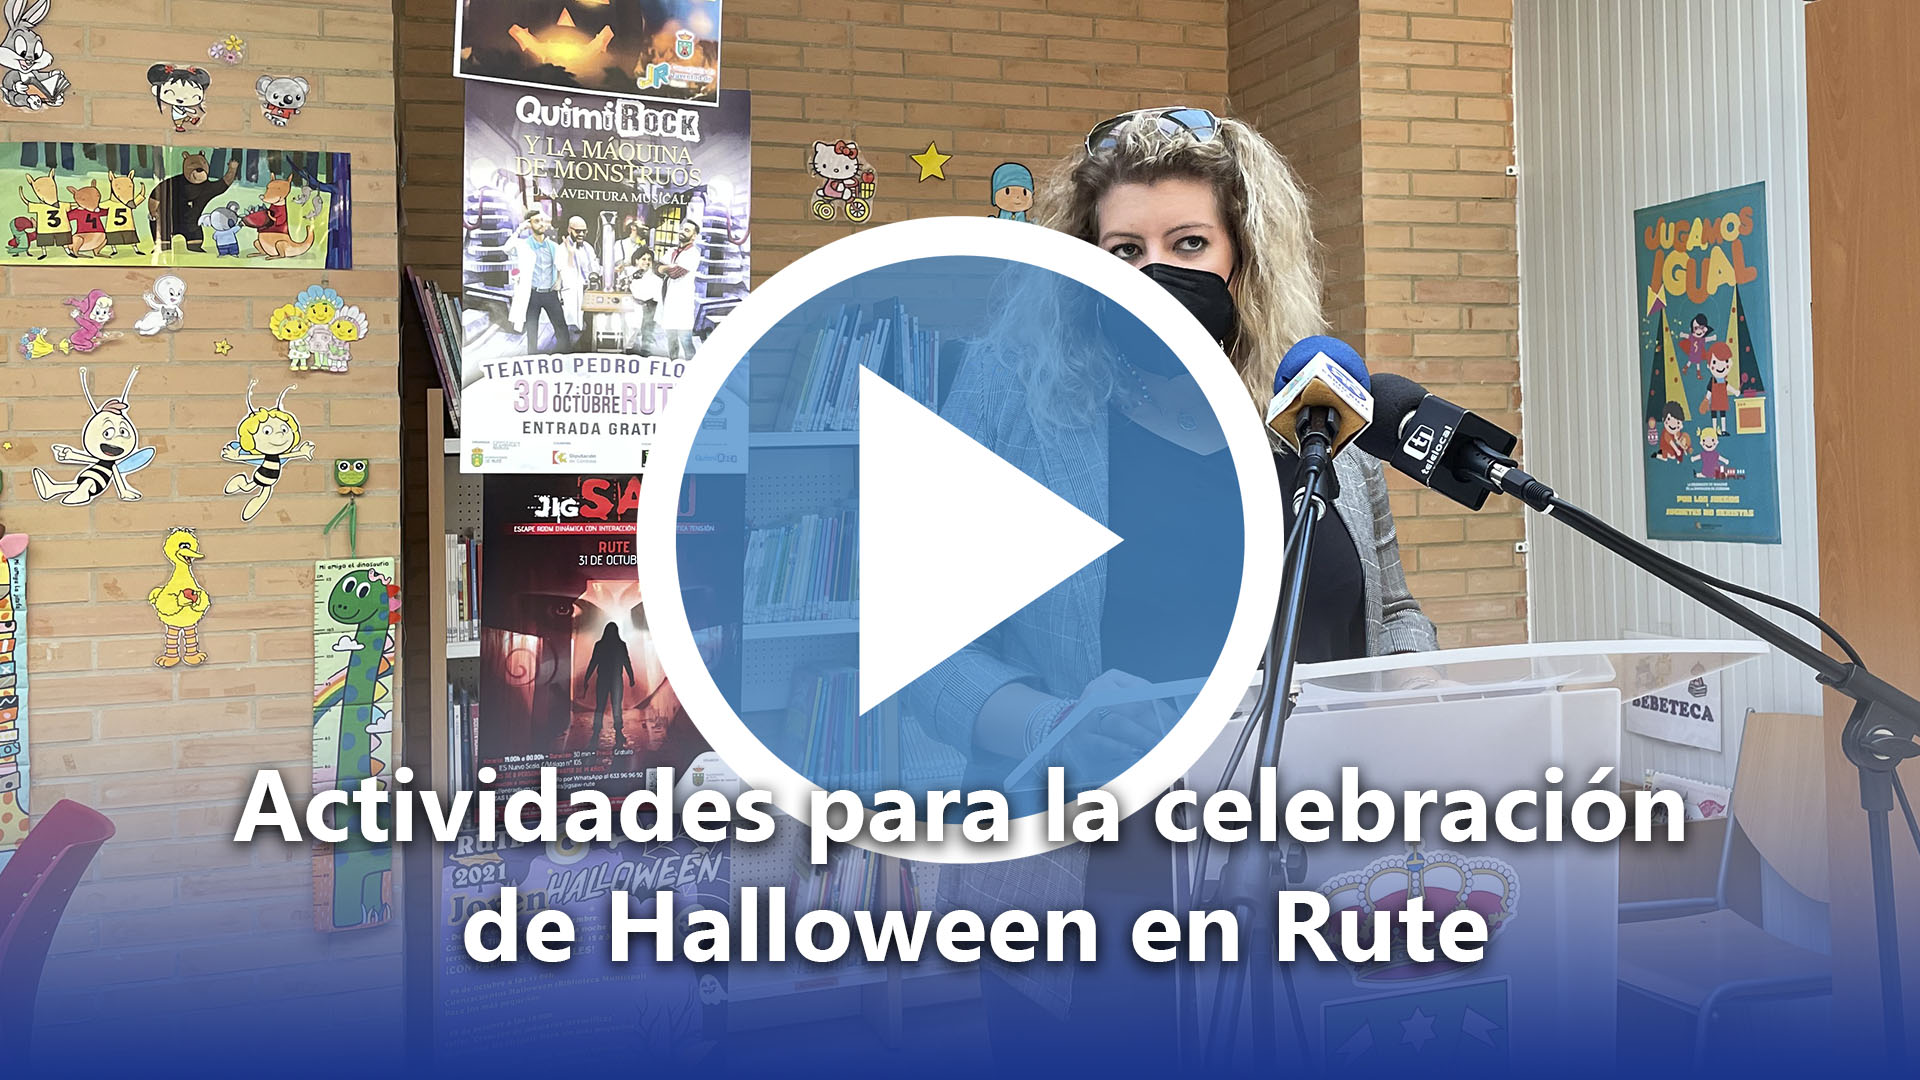 Rute prepares to celebrate Halloween